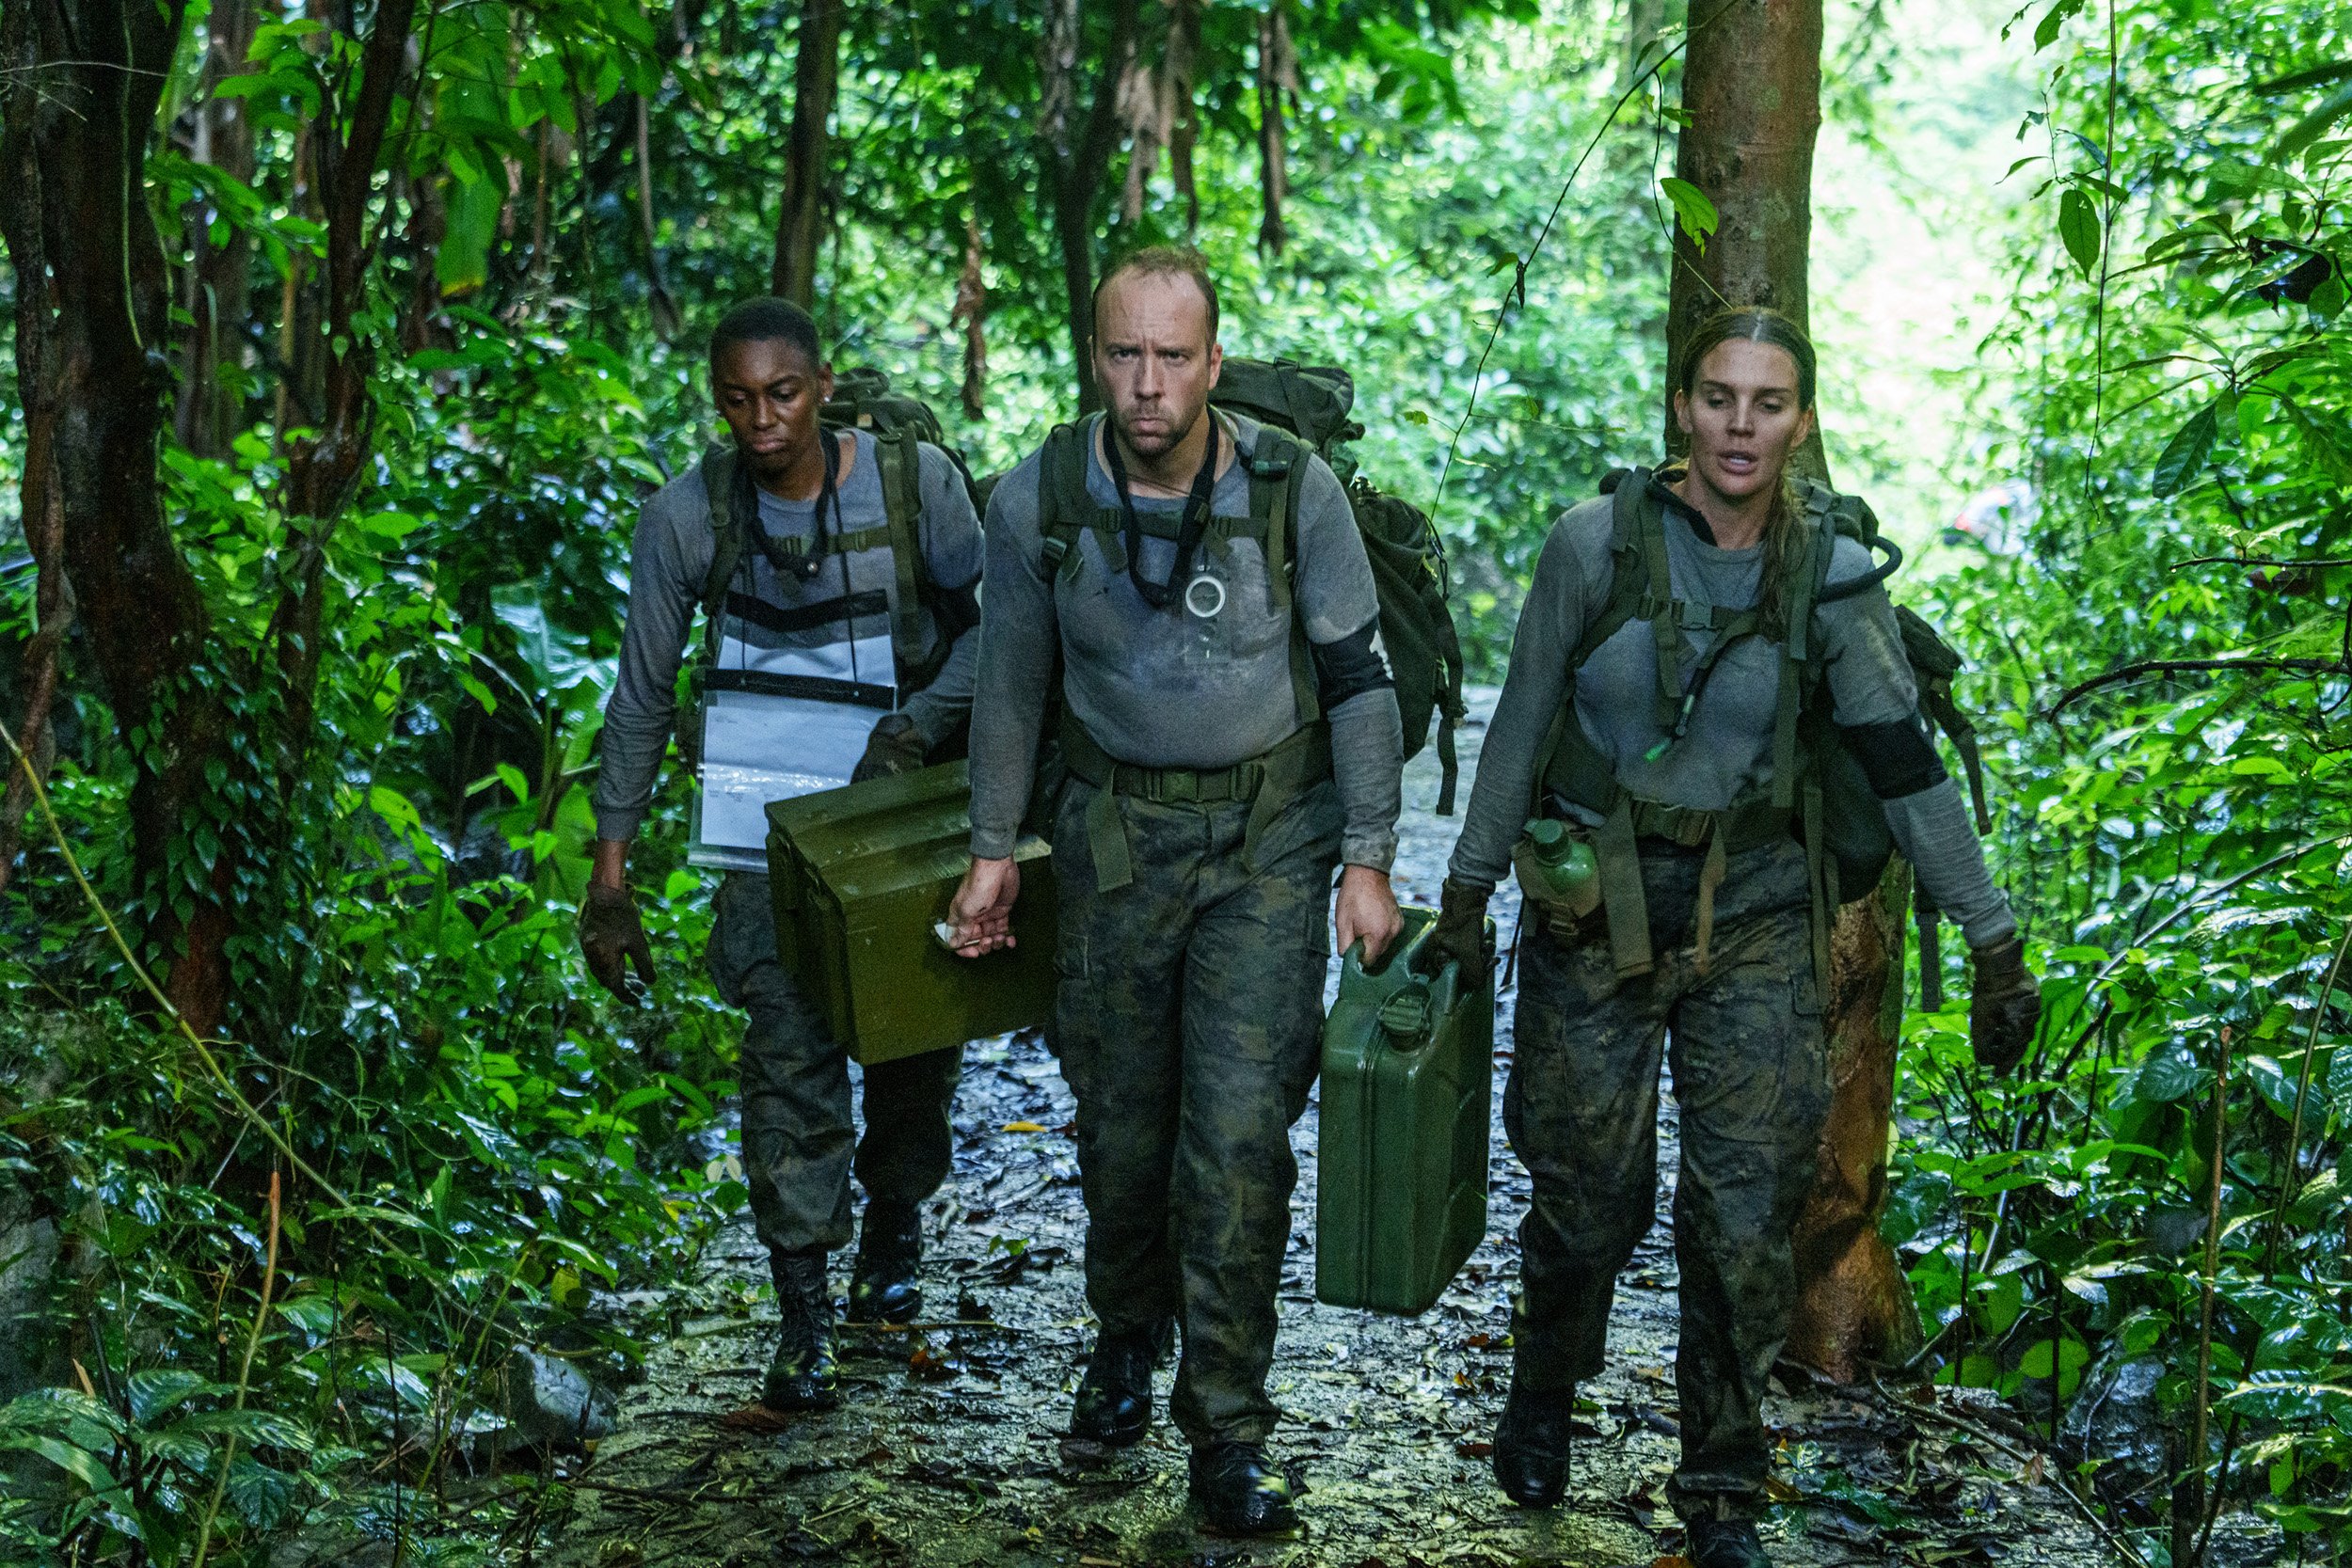  Jungle Navigation - Recruit No 6: Perri Shakes-Drayton, No 1: Matt Hancock, and No 11: Danielle Lloyd  Episode 6: Survival  Minnow Films / Channel 4 